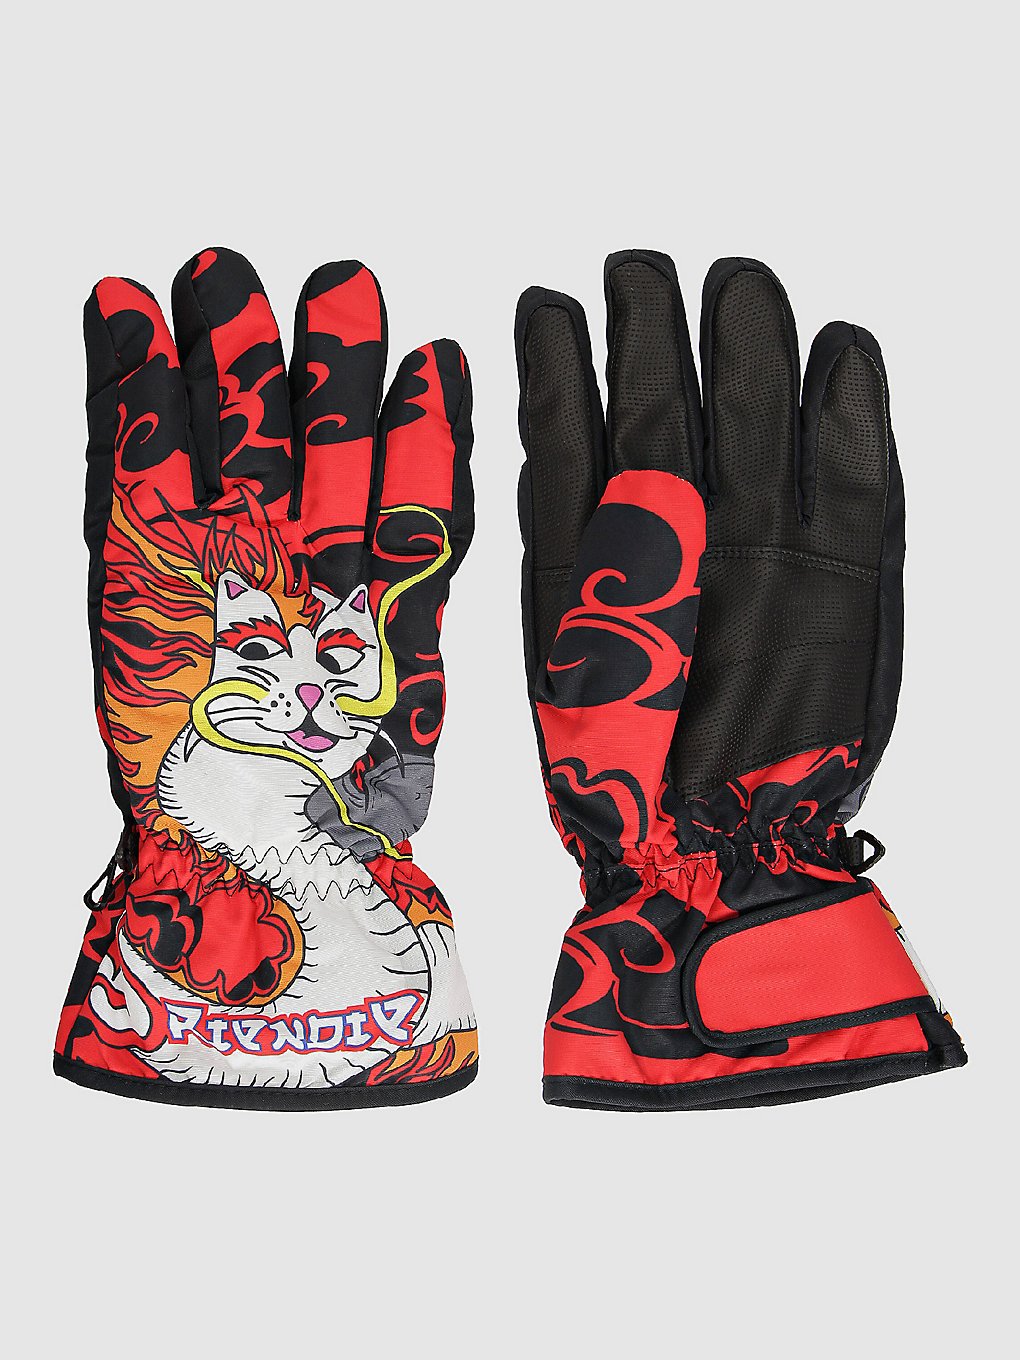 RIPNDIP Dragonerm Handschuhe red kaufen